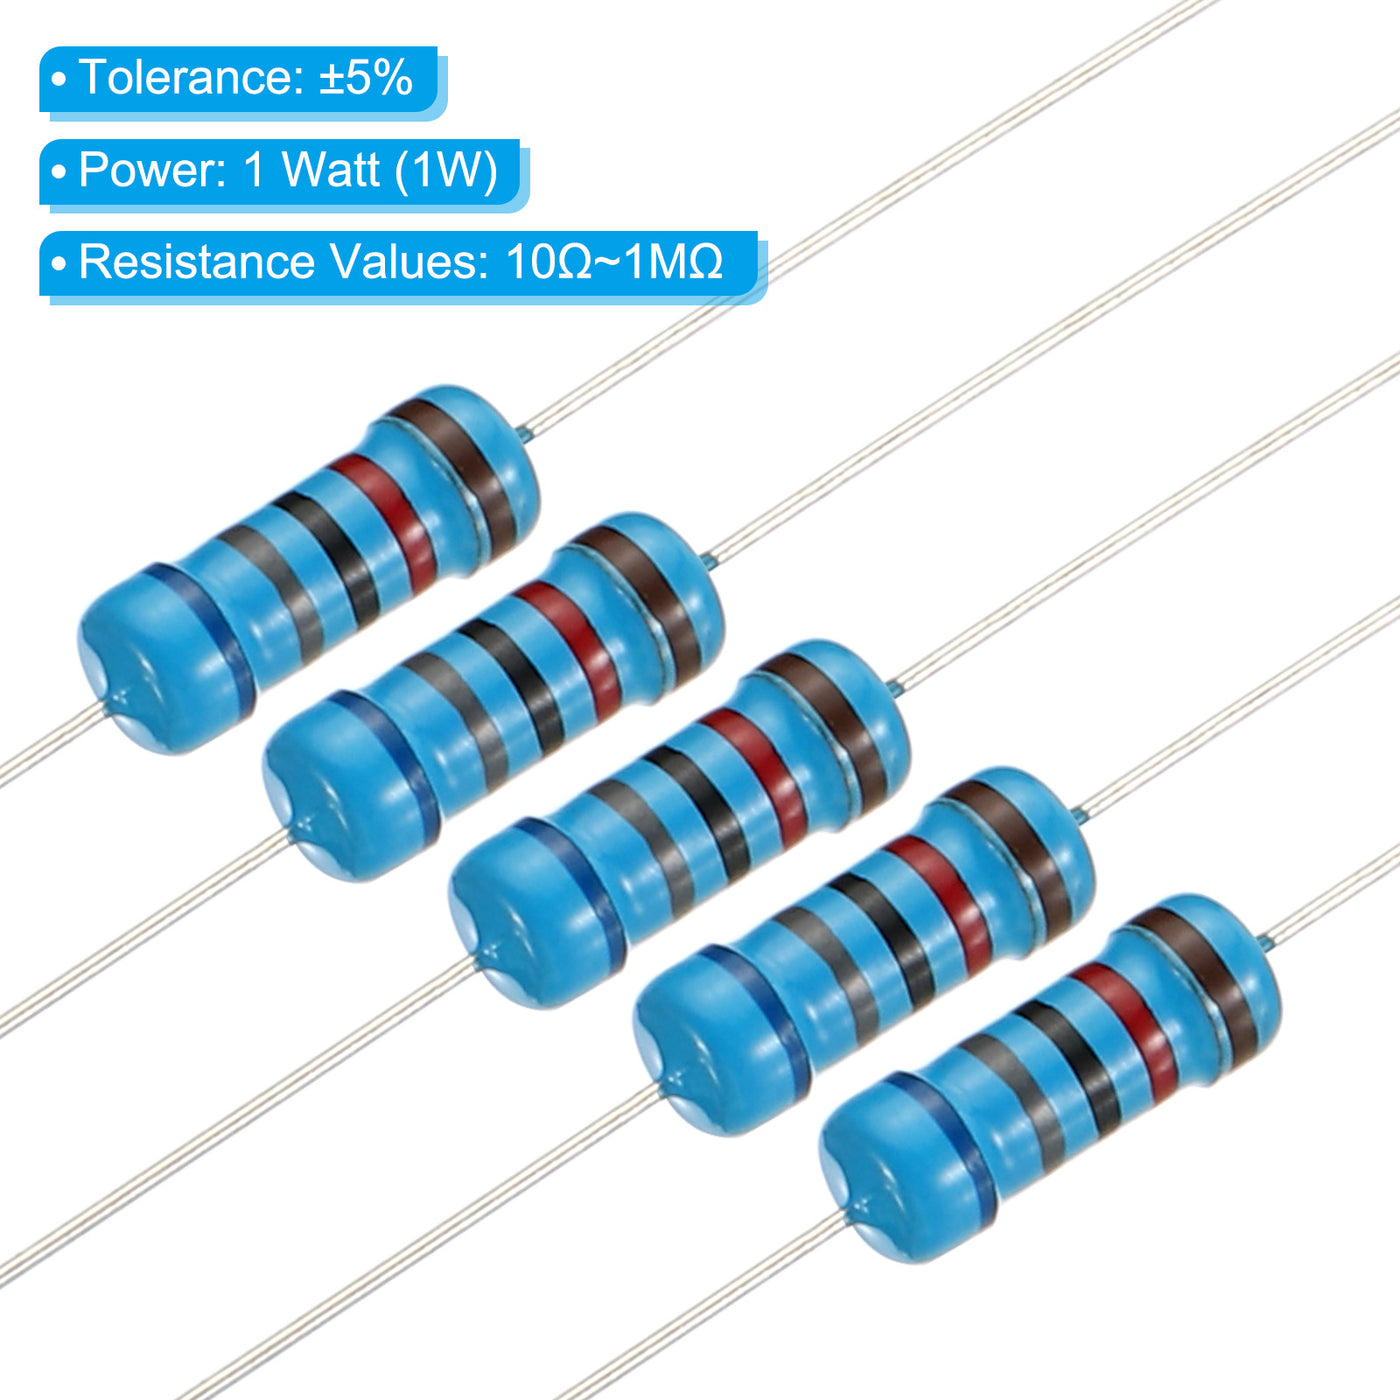 Harfington 200pcs Metal Film Resistor Assortment Kit 10 Ohm - 1M Ohm, 20 Values 1W 5% Tolerance for DIY Projects Experiments